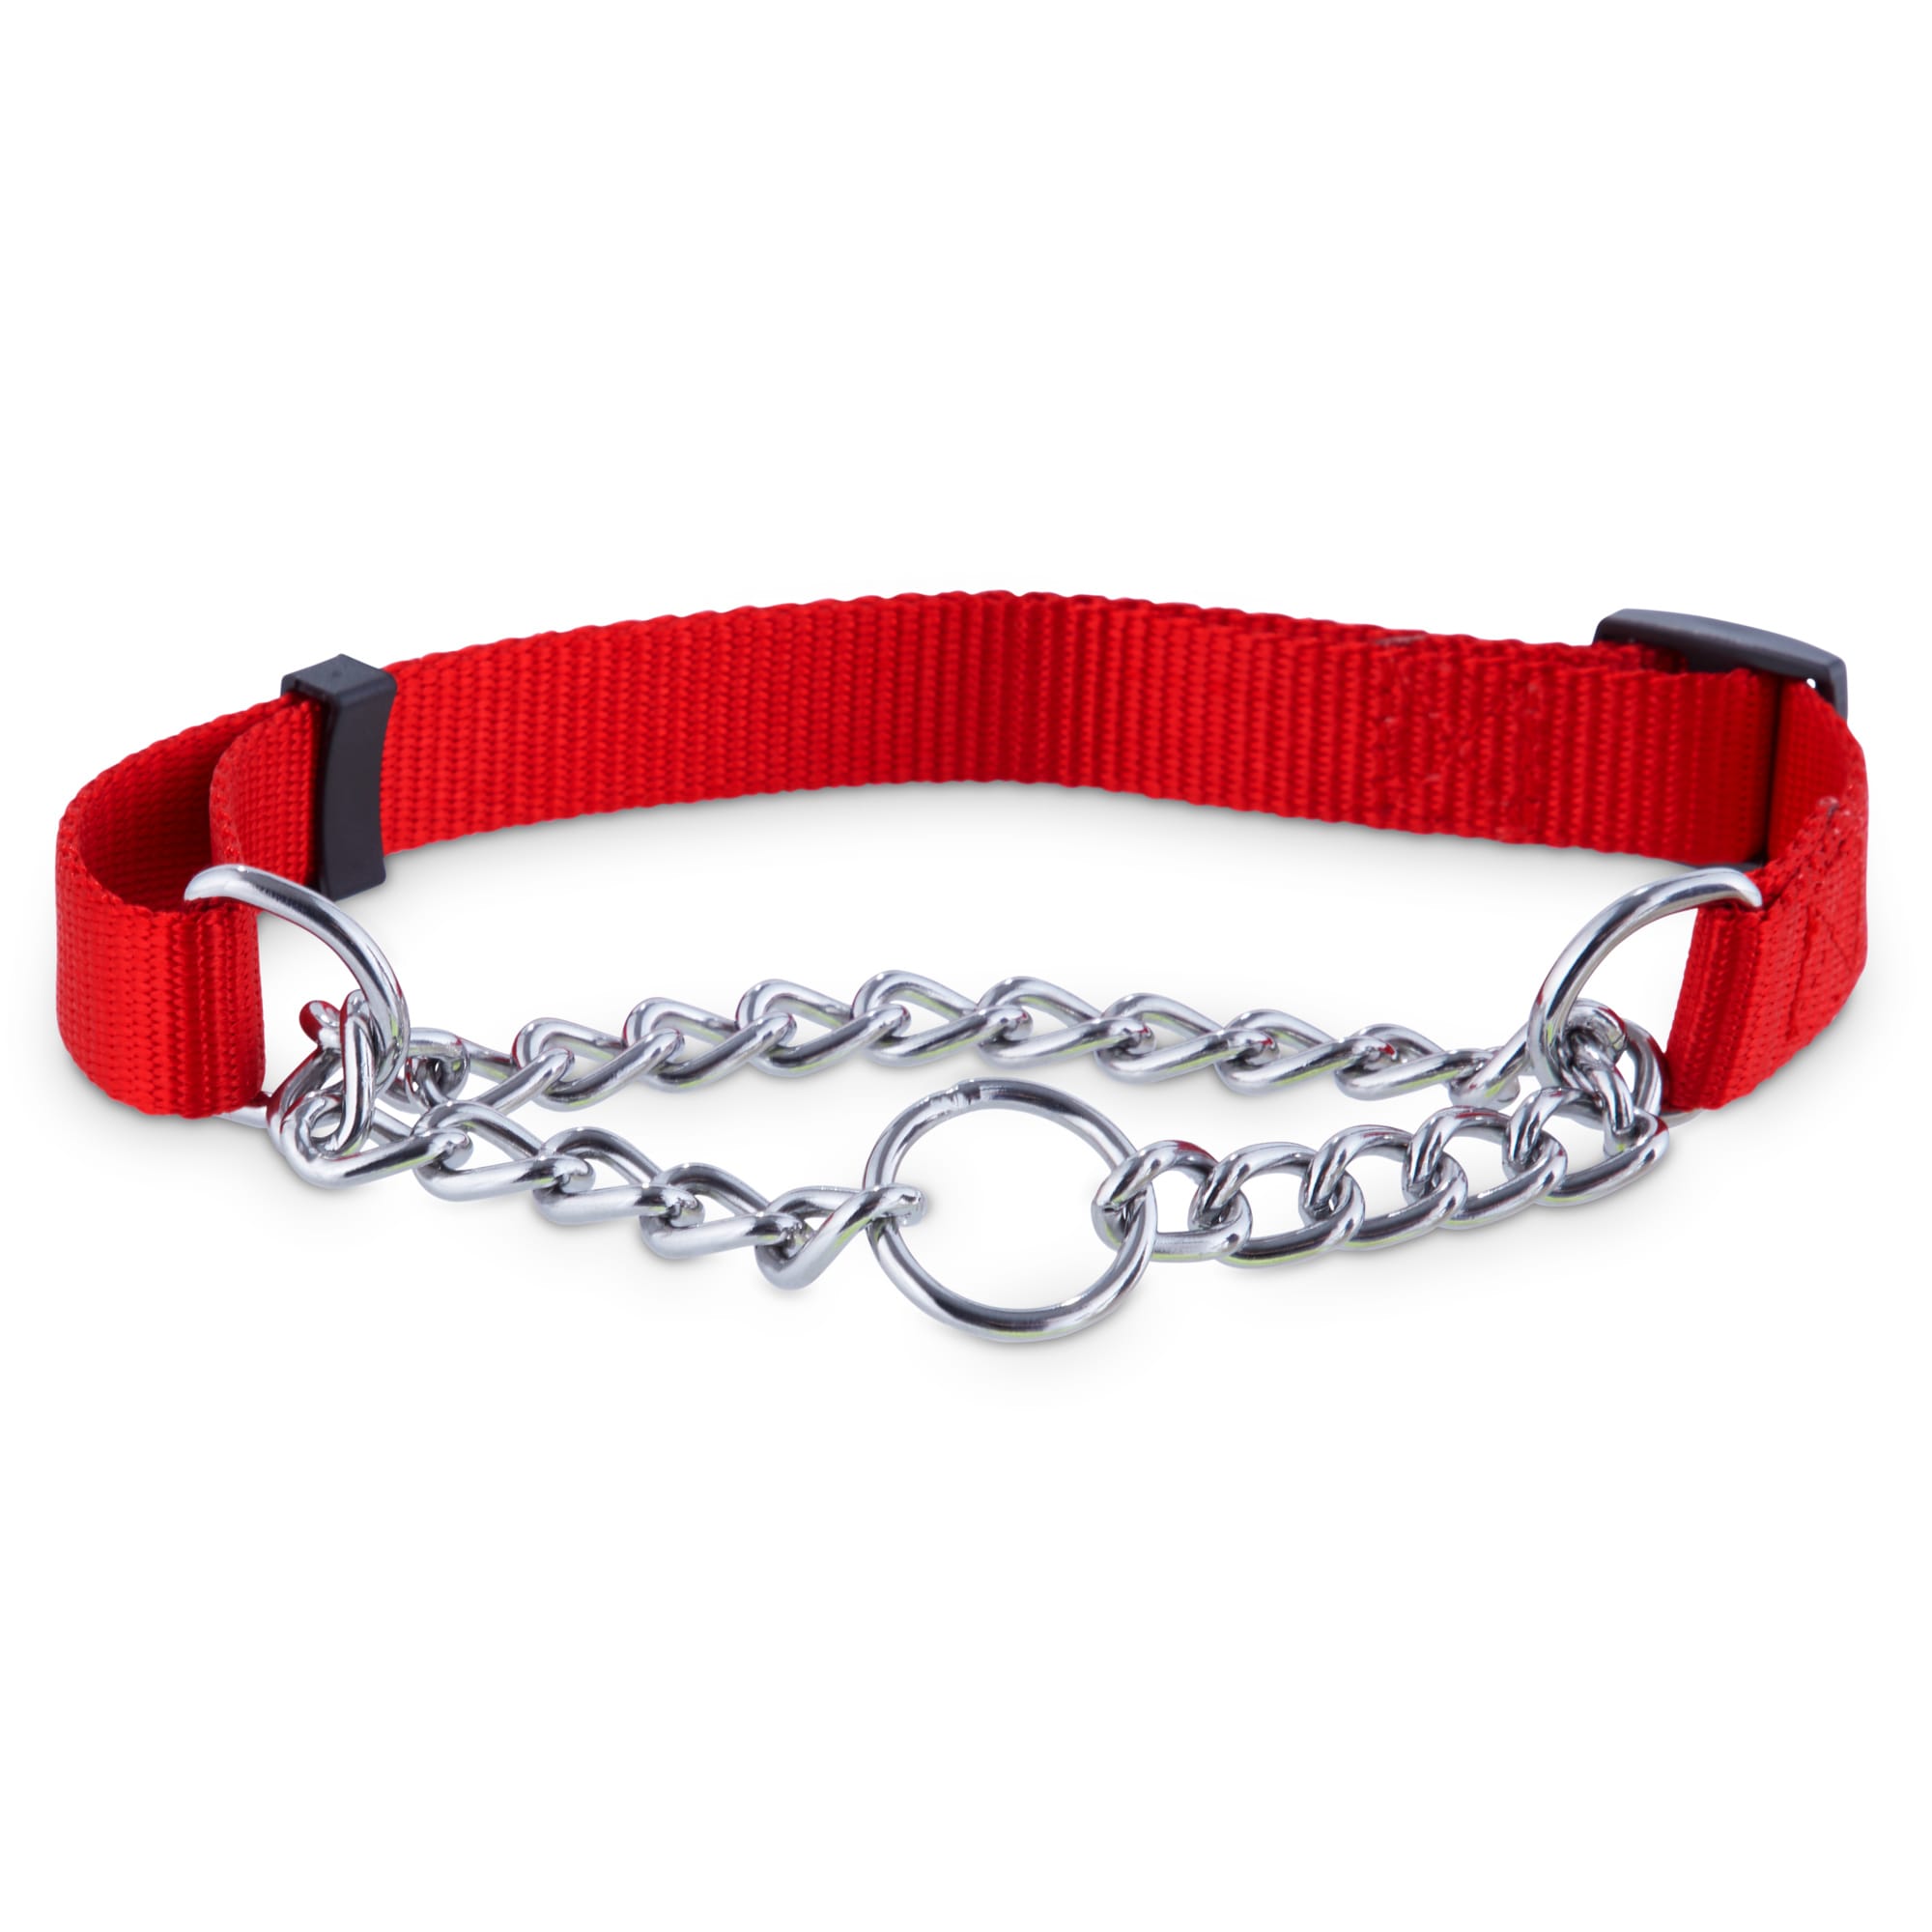 Petco Red Check Nylon and Chain Dog Collar, 3/4" Width, Medium